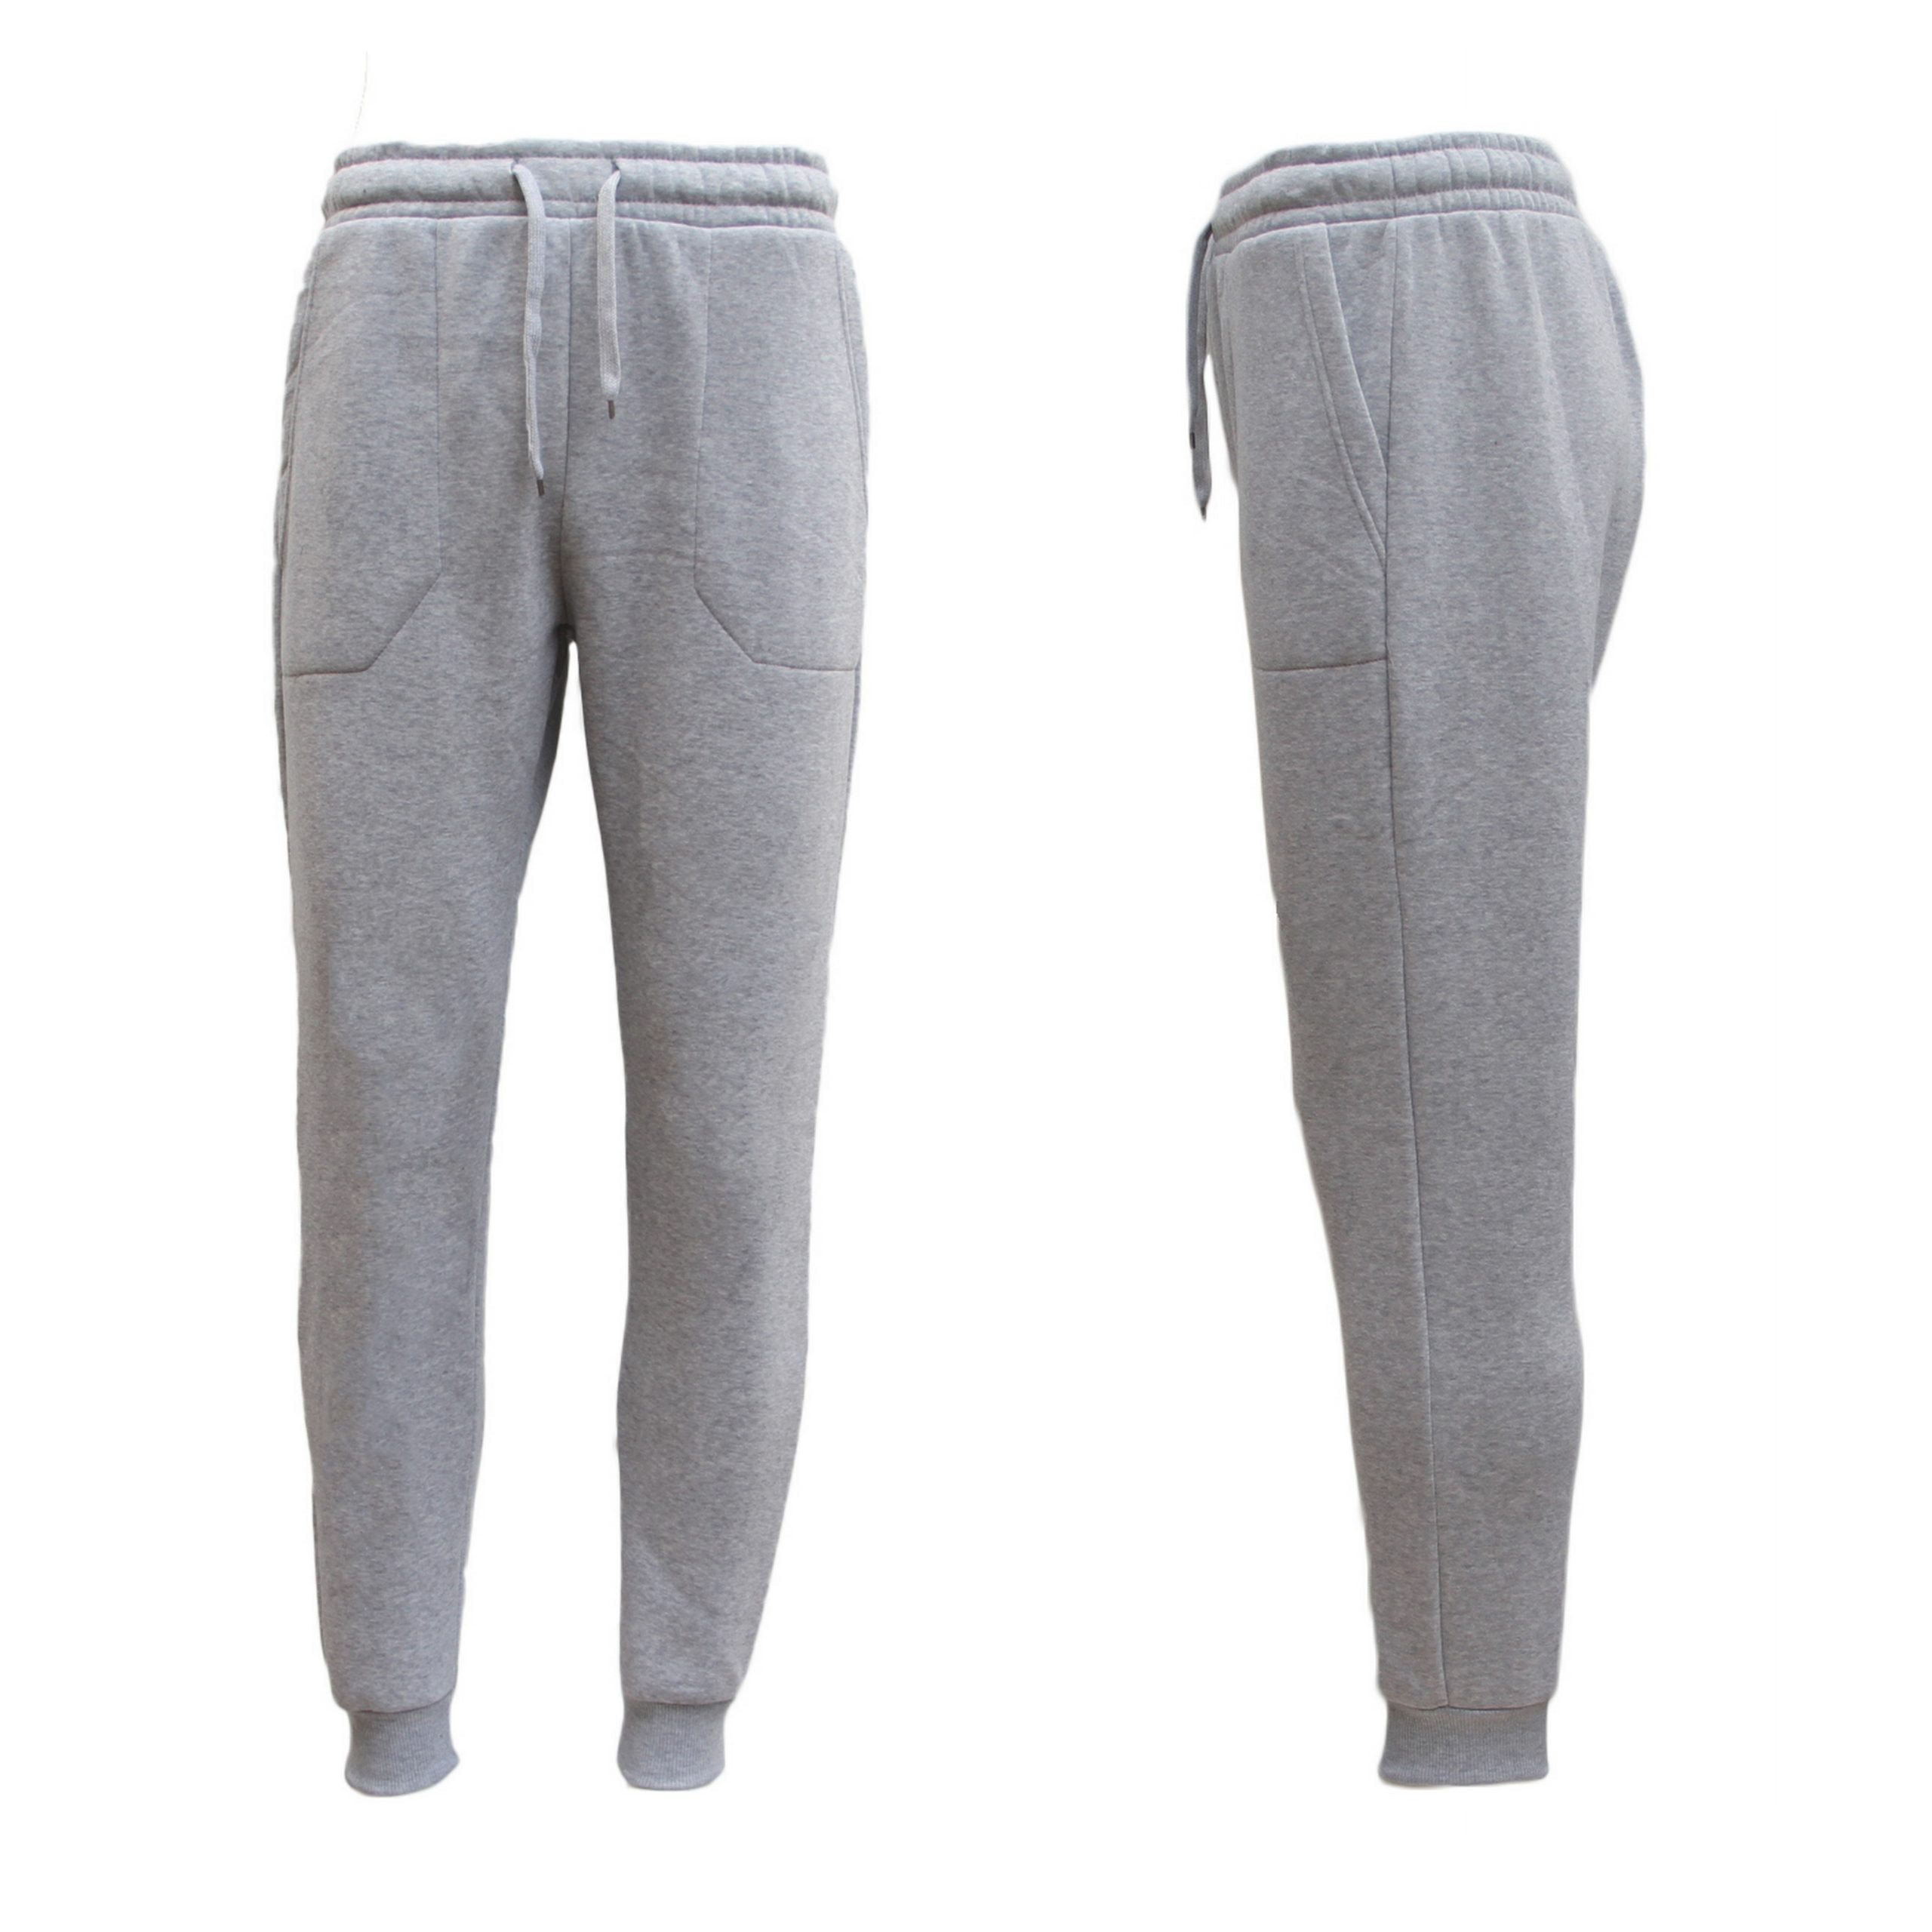 Mens Unisex Fleece Lined Sweat Track Pants Suit Casual Trackies Slim Cuff XS-6XL, Light Grey, L